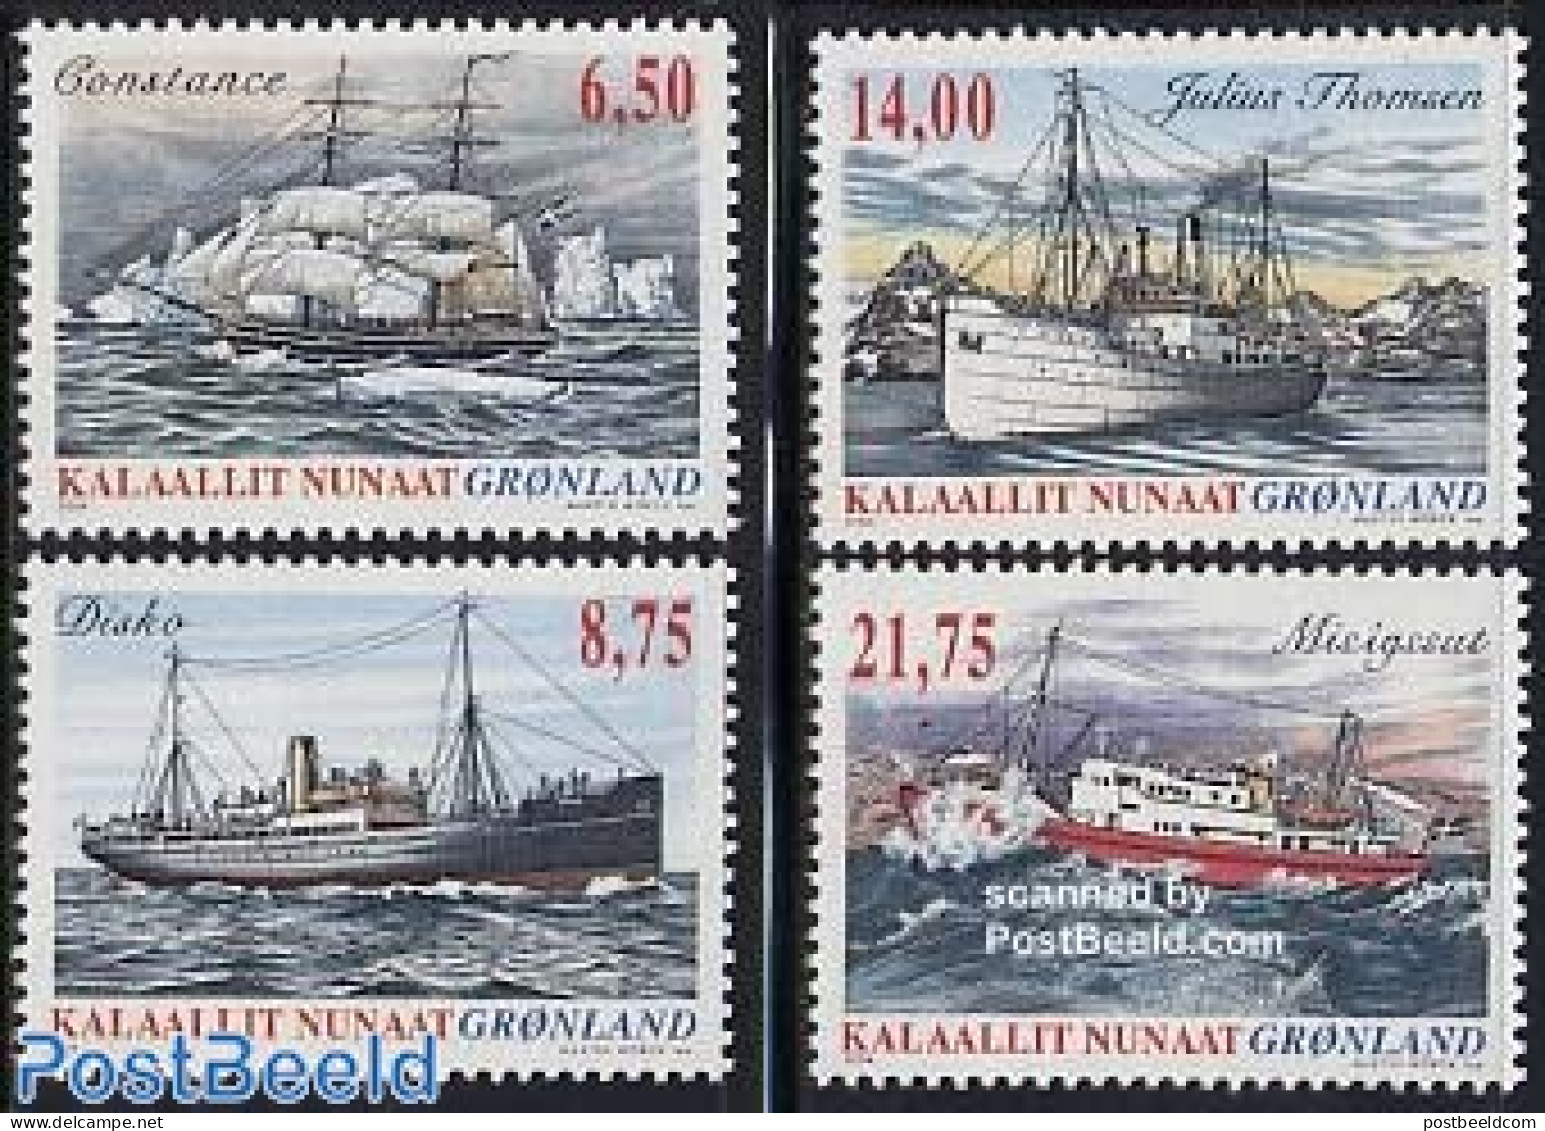 Greenland 2004 Ships 4v, Mint NH, Transport - Ships And Boats - Ongebruikt